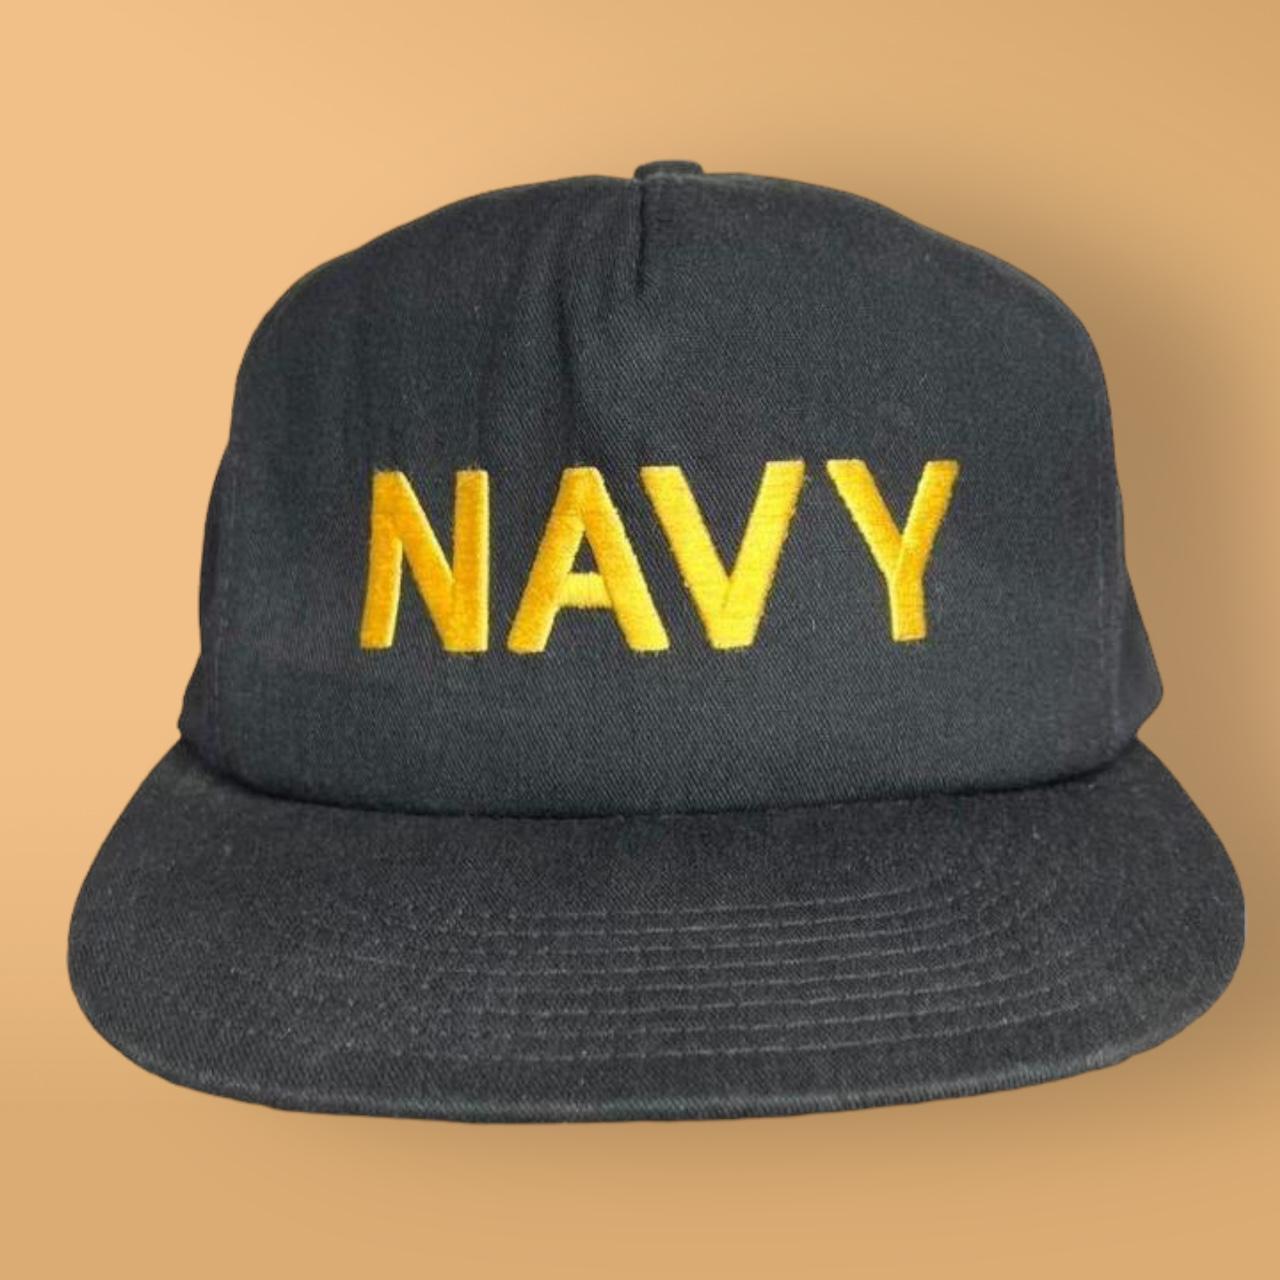 American Vintage Men's Hat - Navy